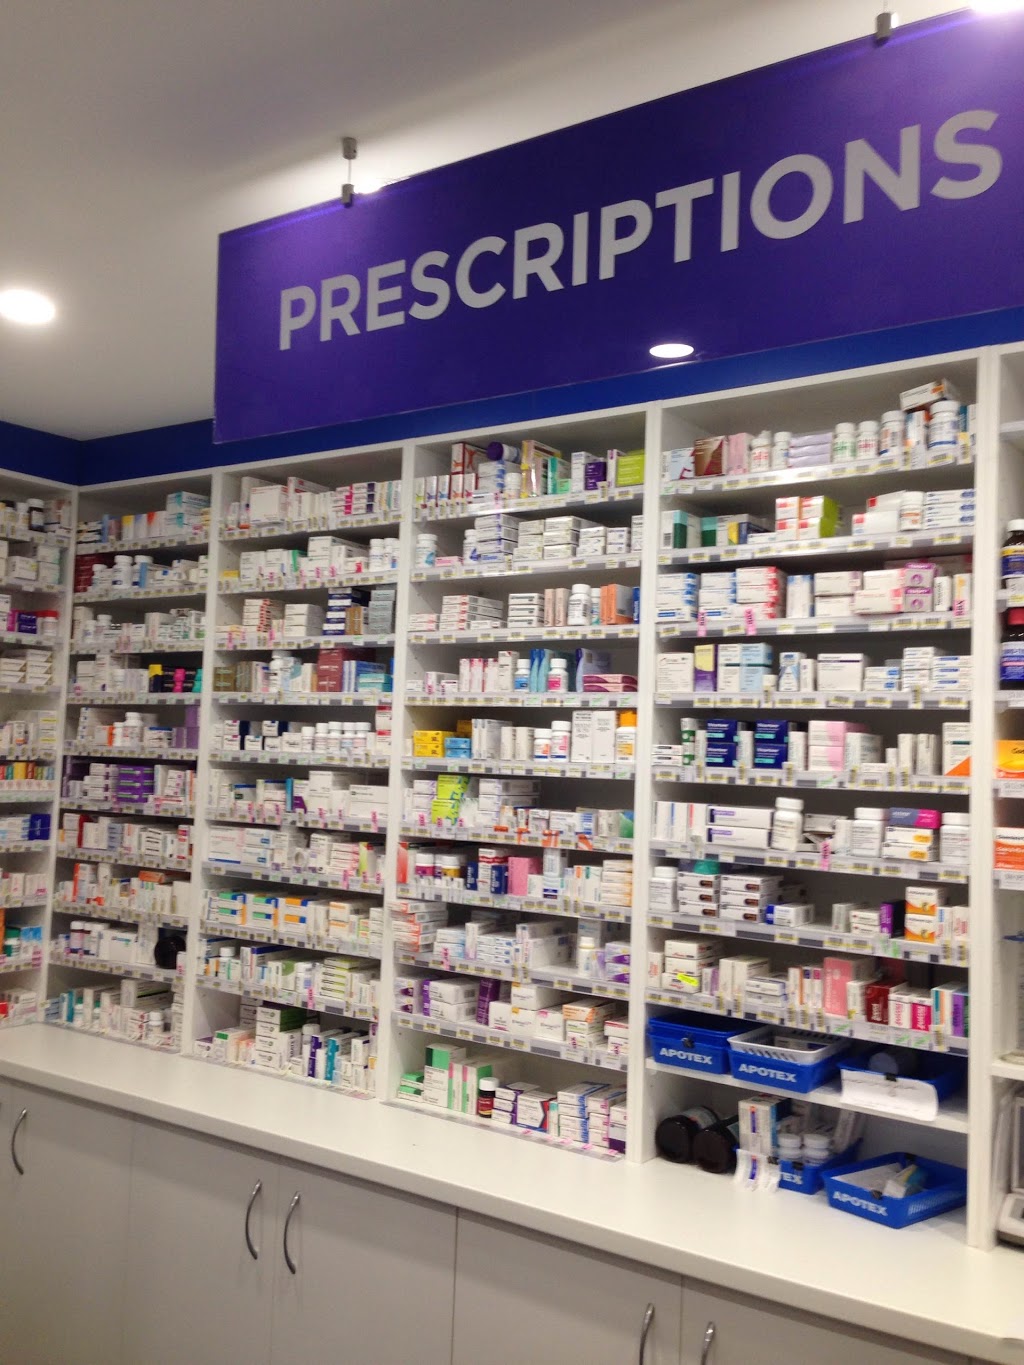 Priority Health Pharmacy Medowie (Formerly Forrest Mall Prescrip | pharmacy | 35 Ferodale Rd, Medowie NSW 2318, Australia | 0249829516 OR +61 2 4982 9516